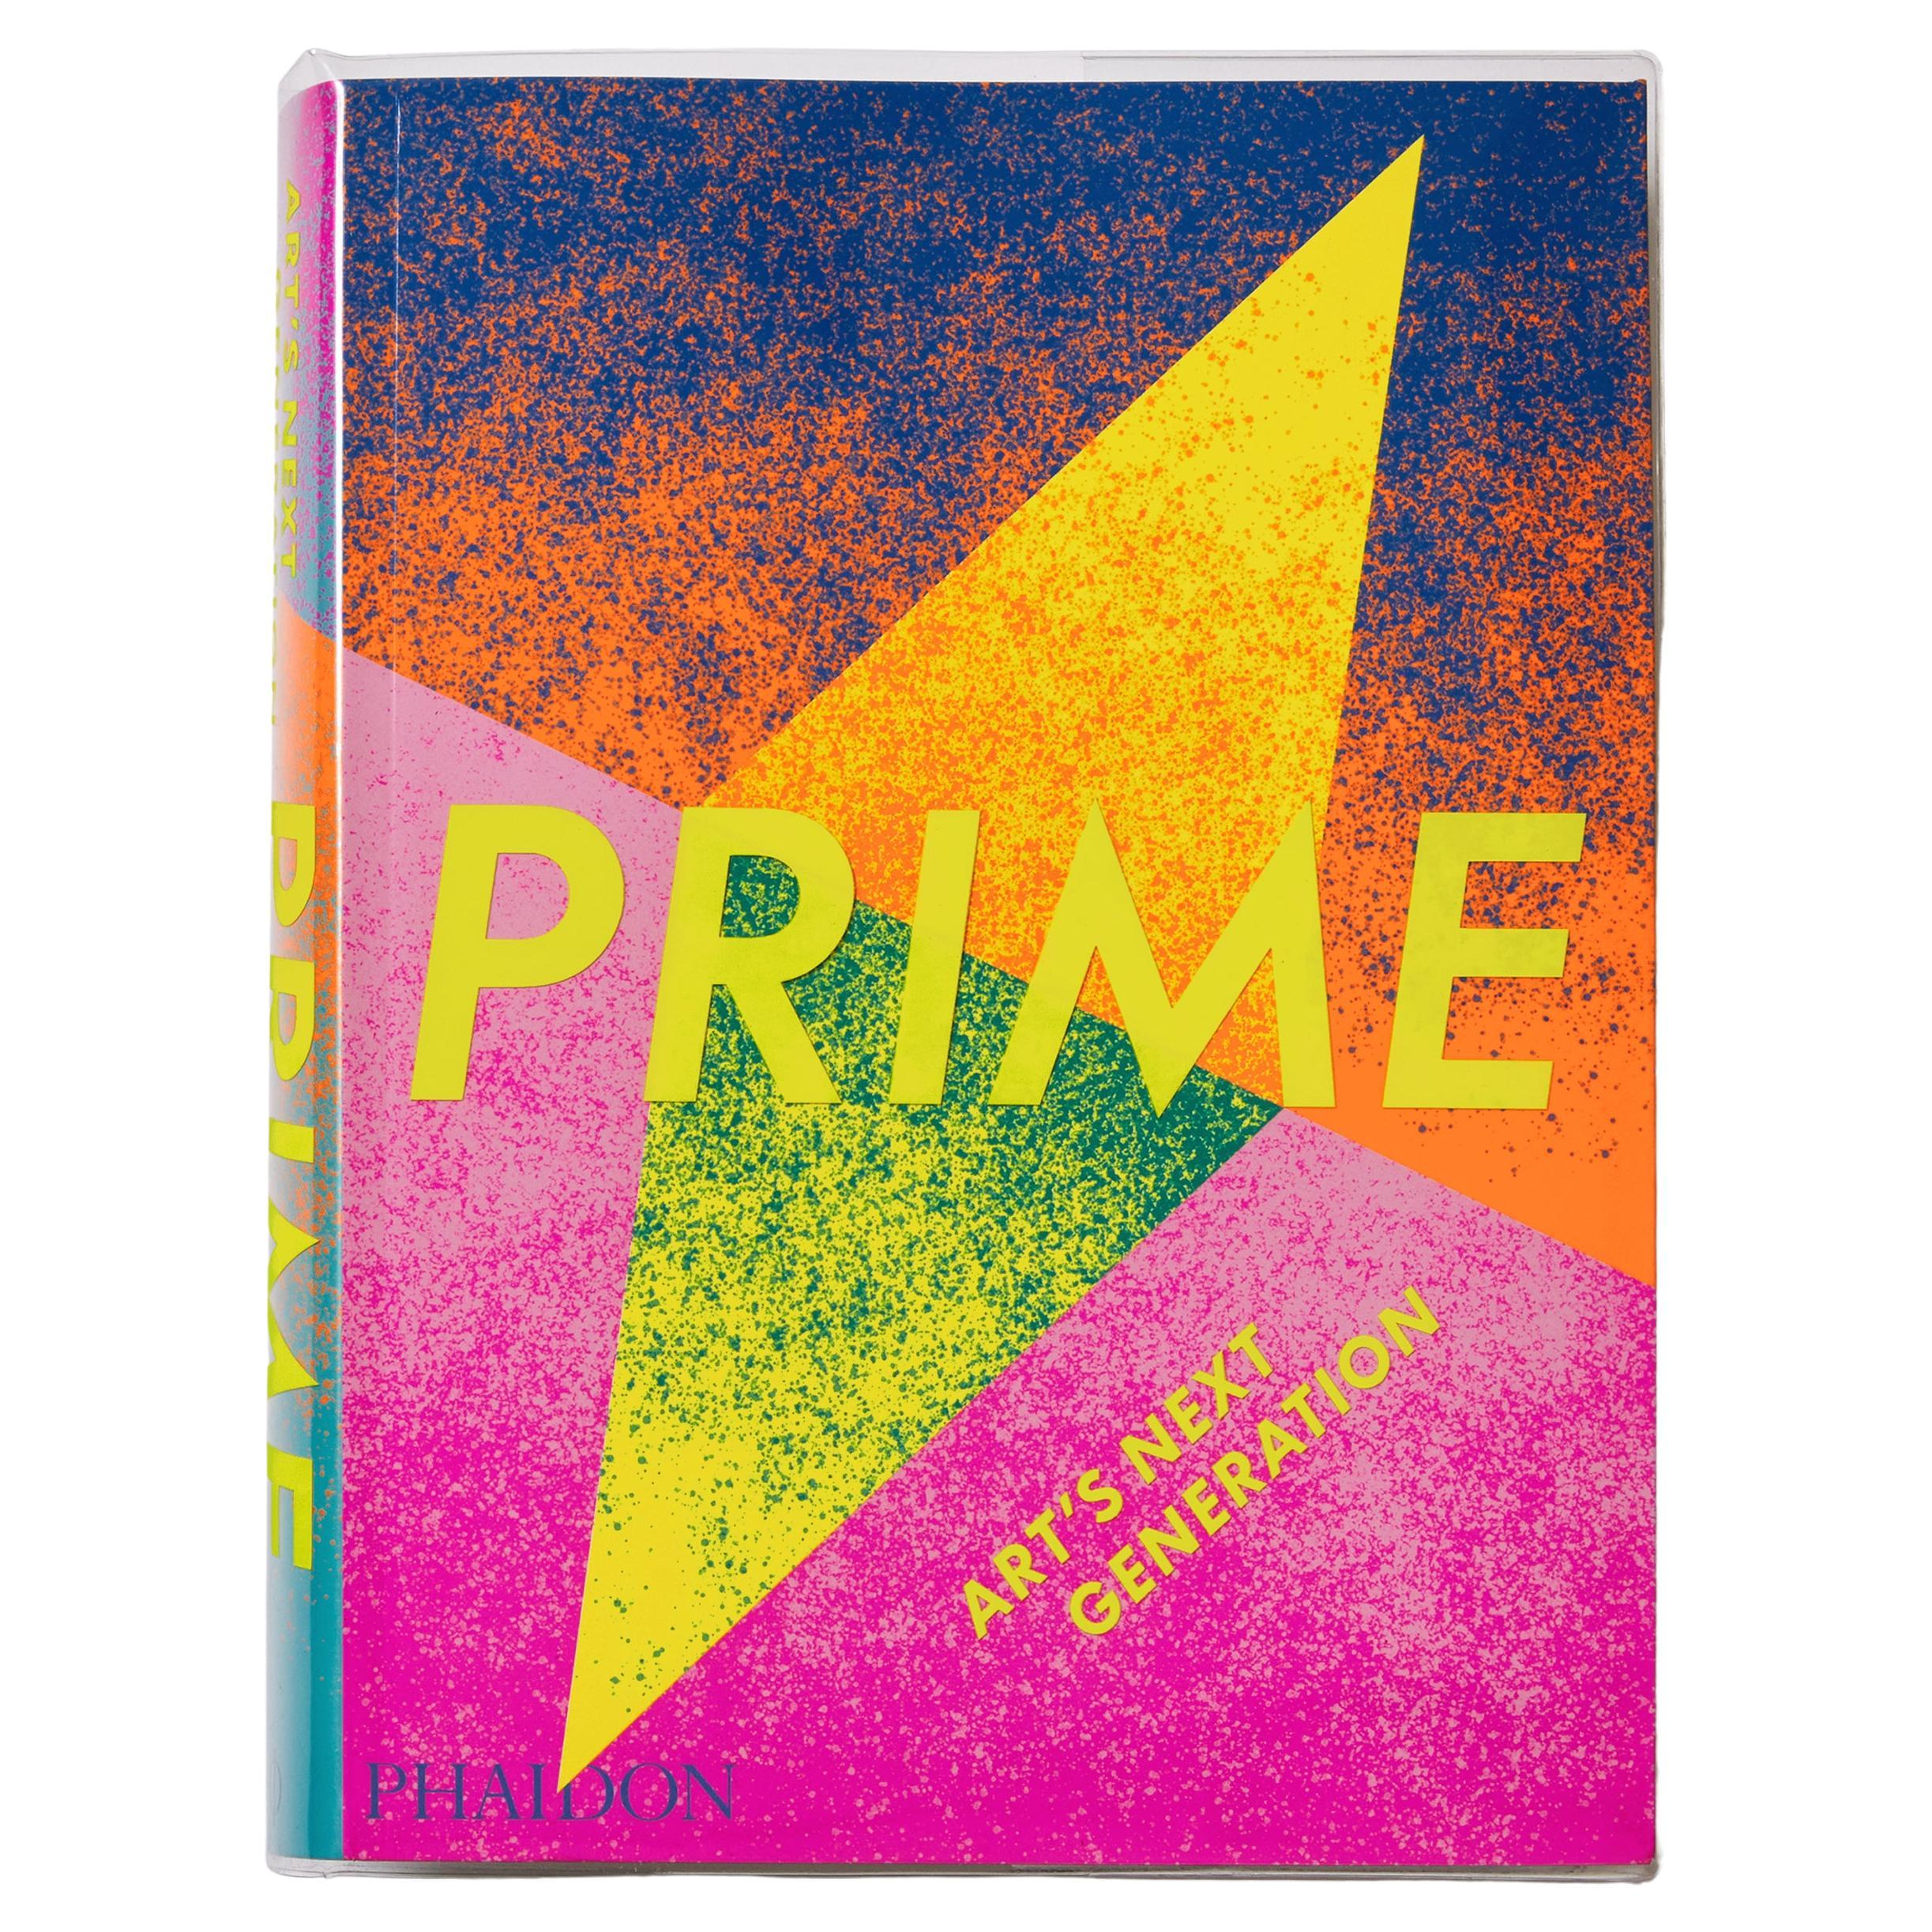 Prime, Art's next Generation For Sale